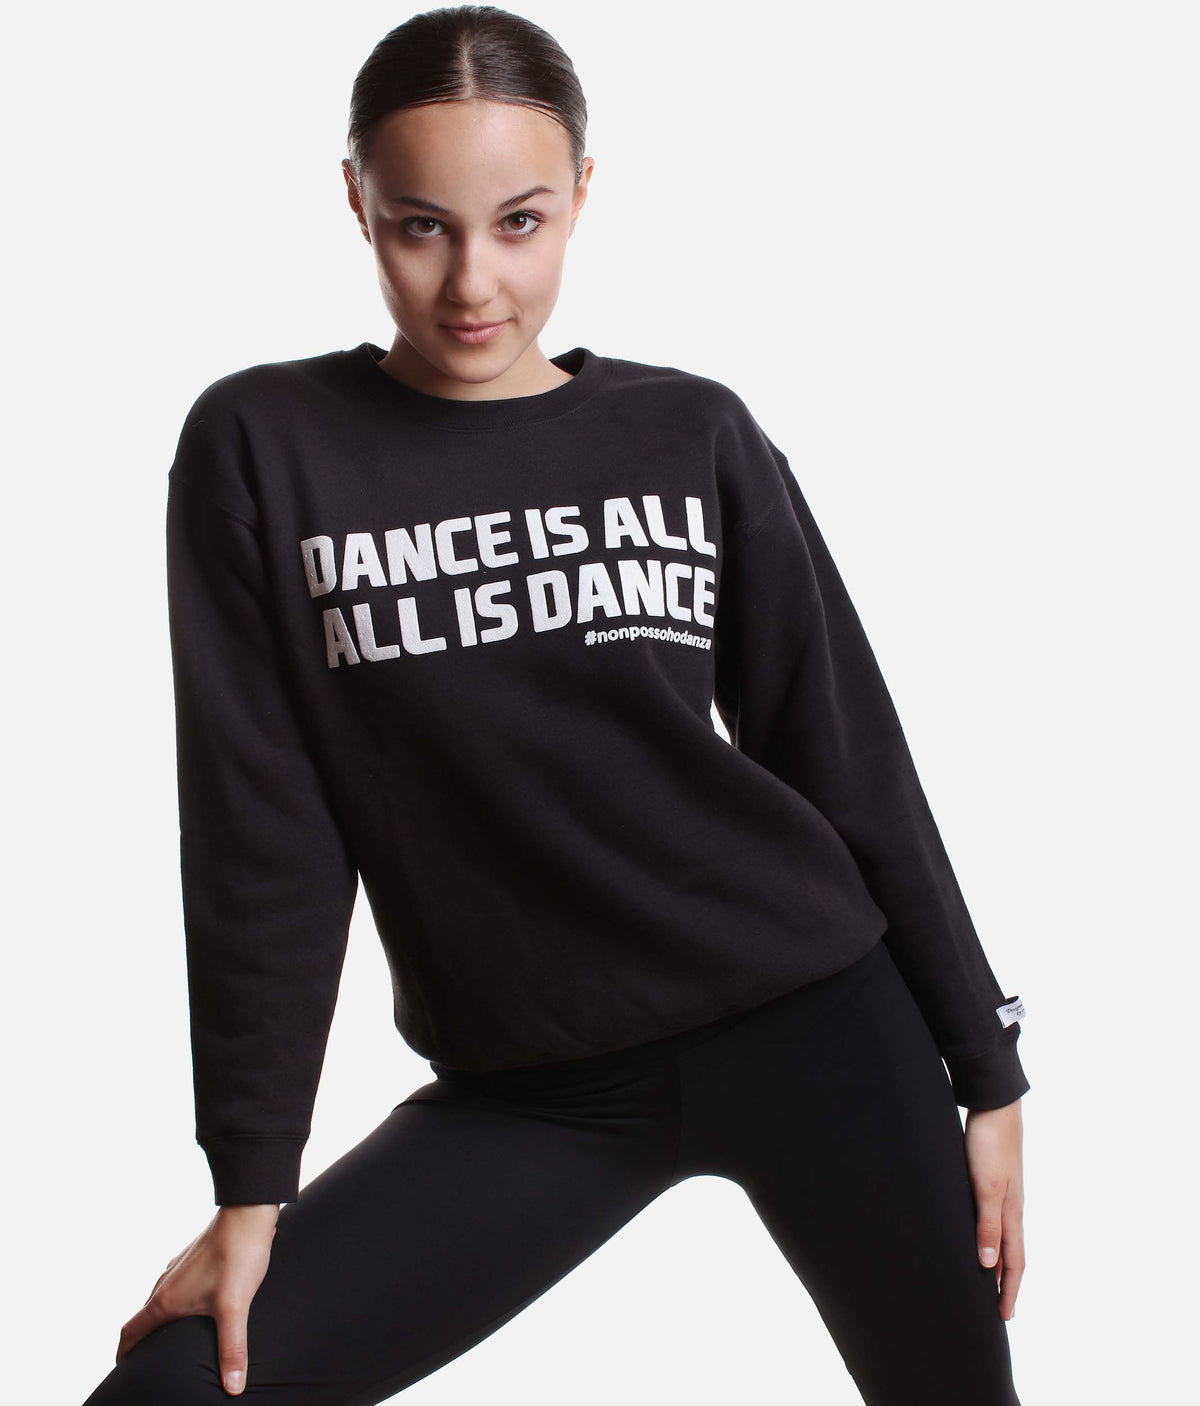 All Is Dance Sweatshirt - 0127